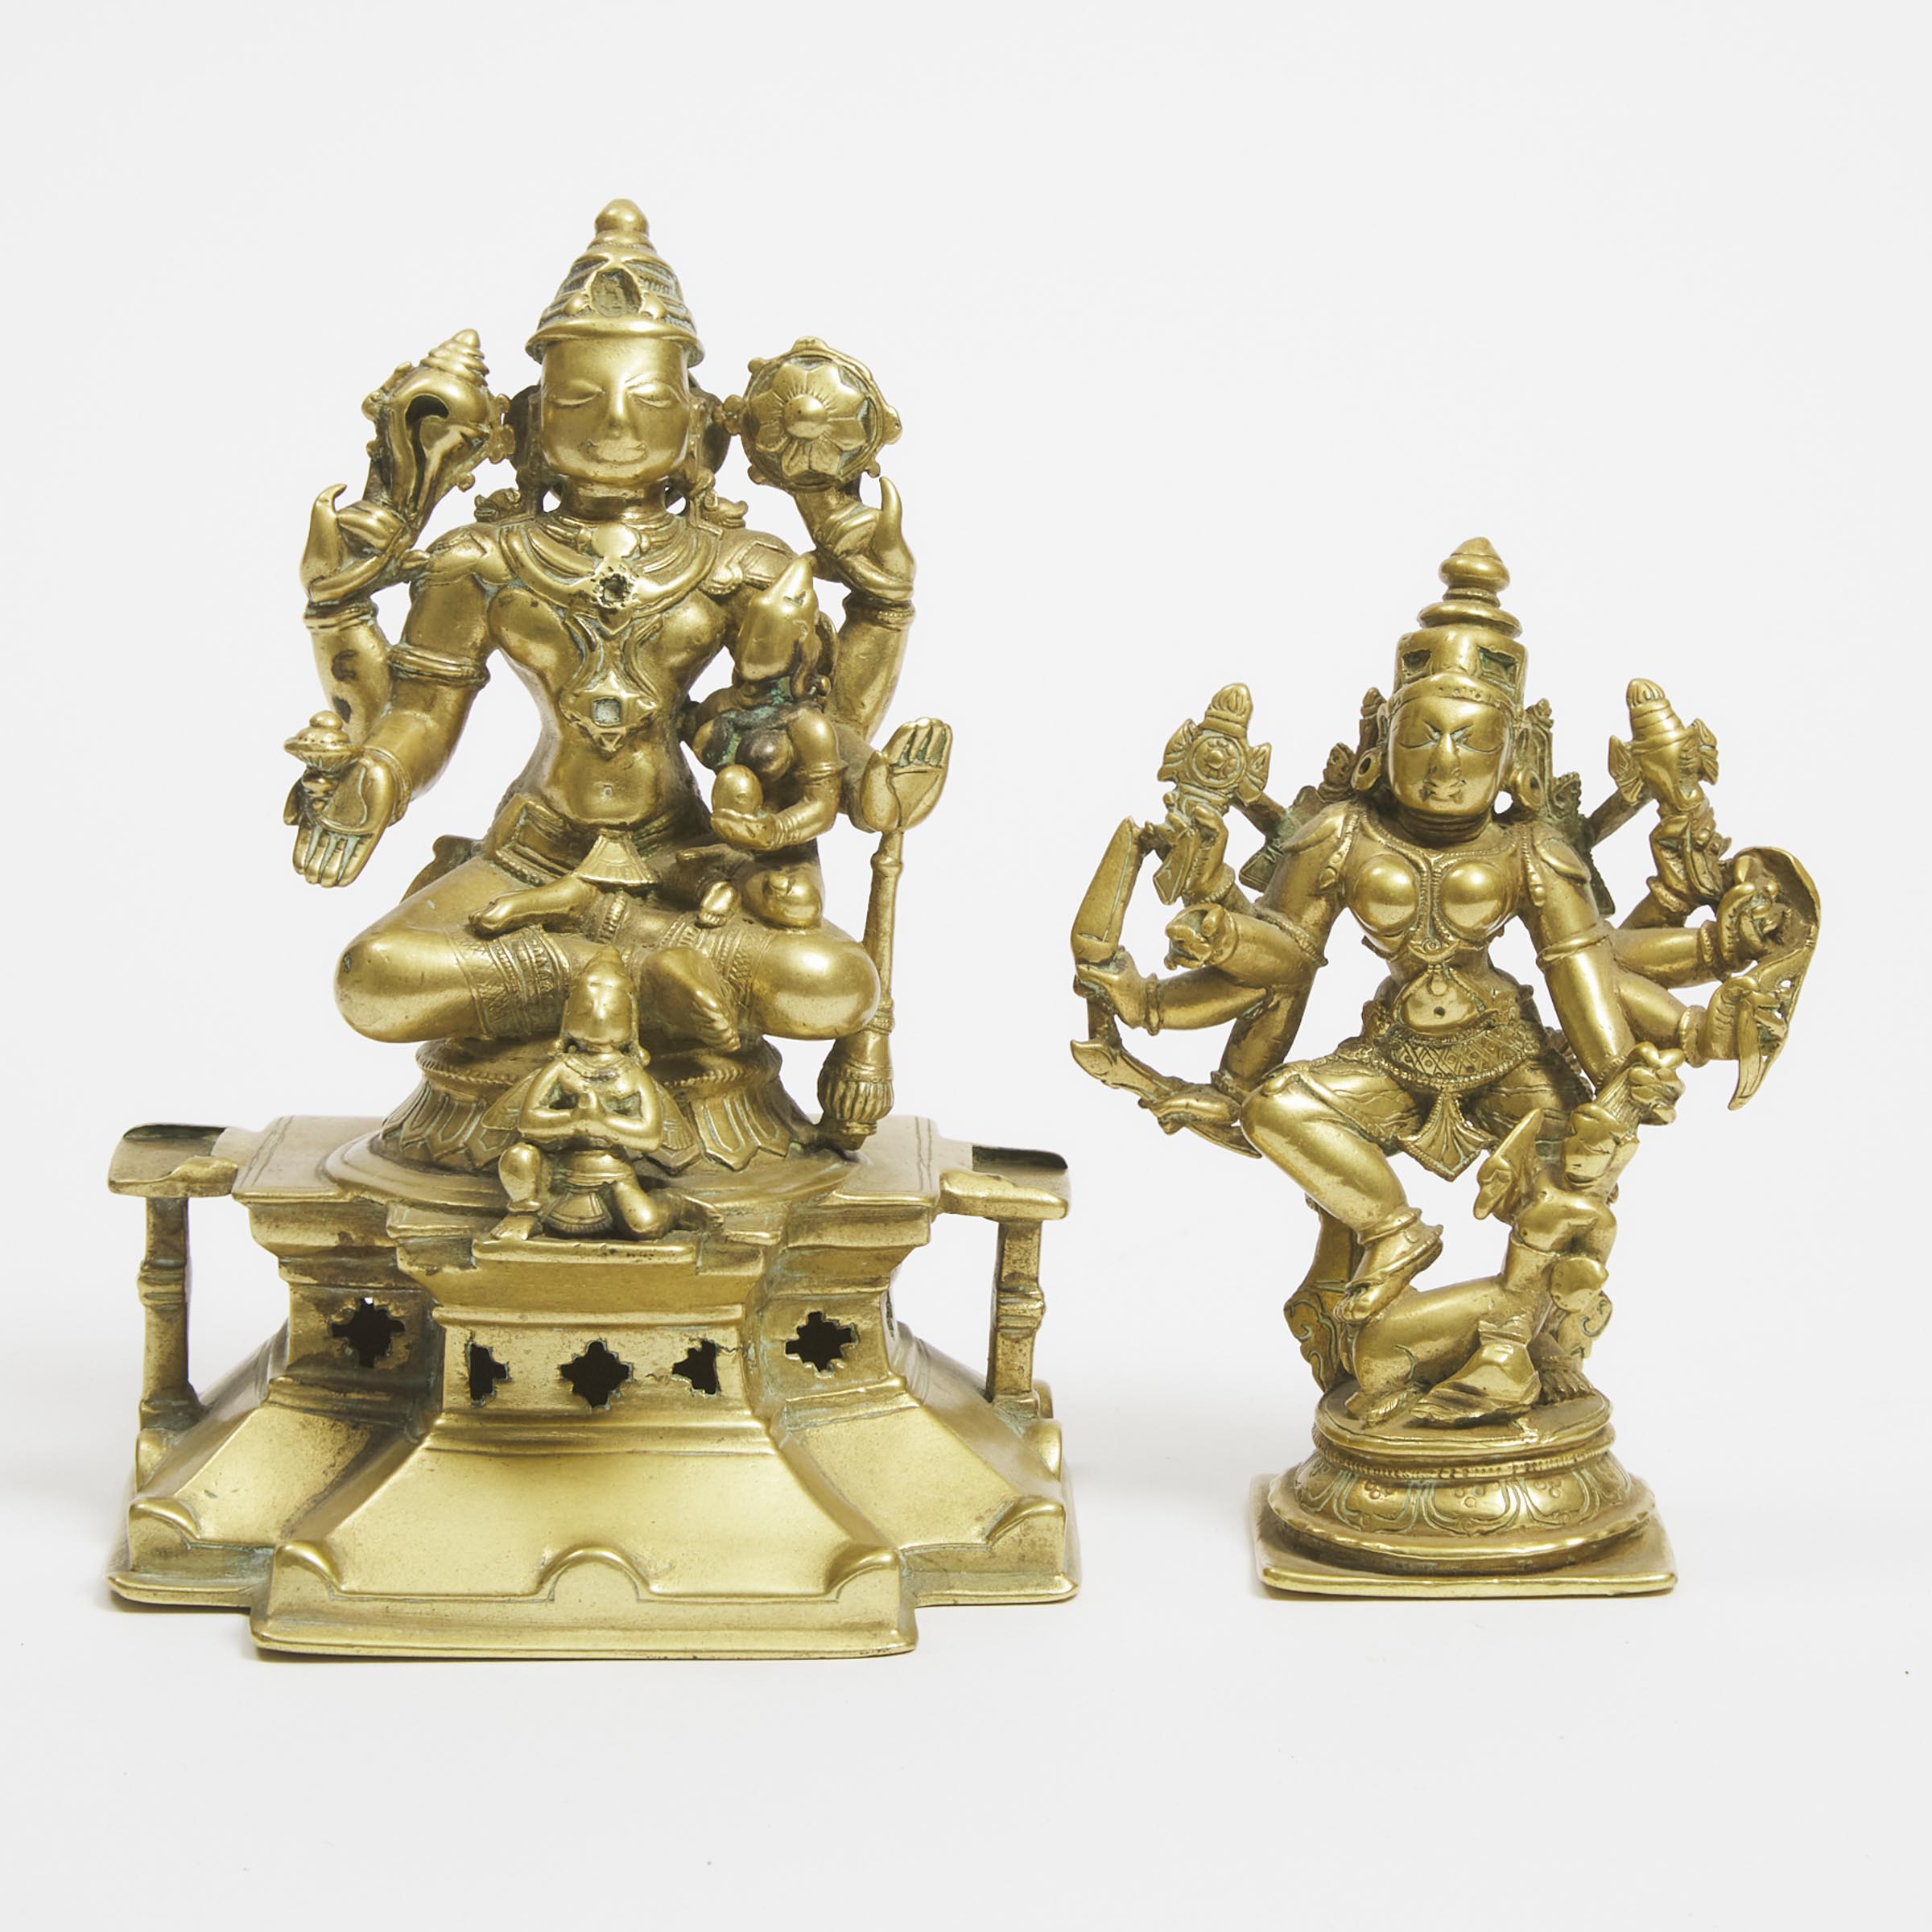 Two Indian Bronze Figures of Durga and Vishnu, Maharashtra, 16th/17th Century